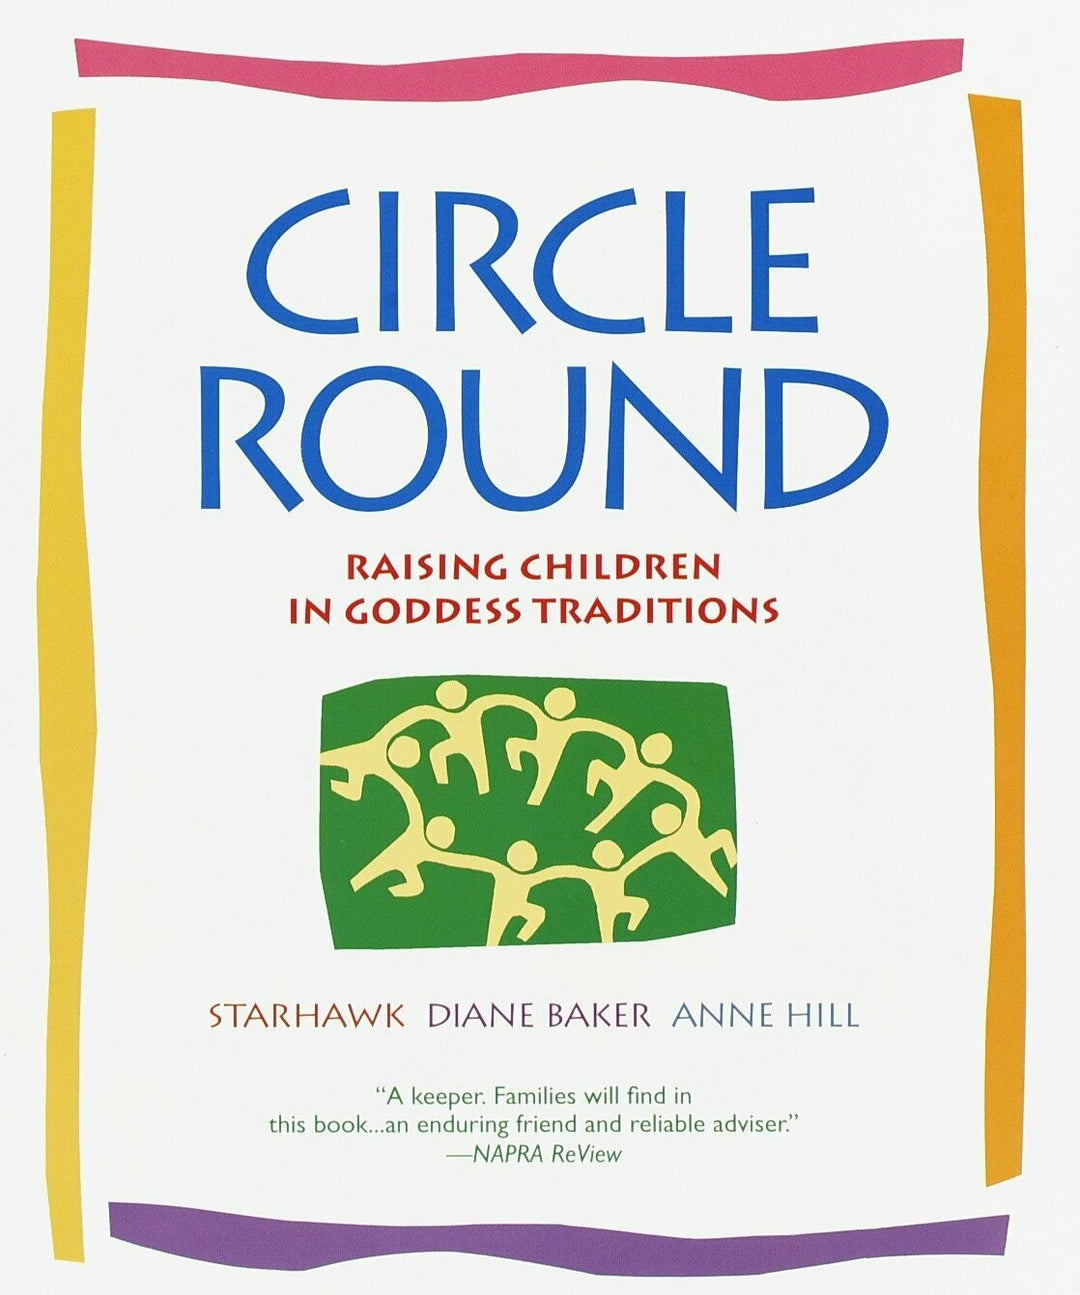 Circle Round by Starhawk